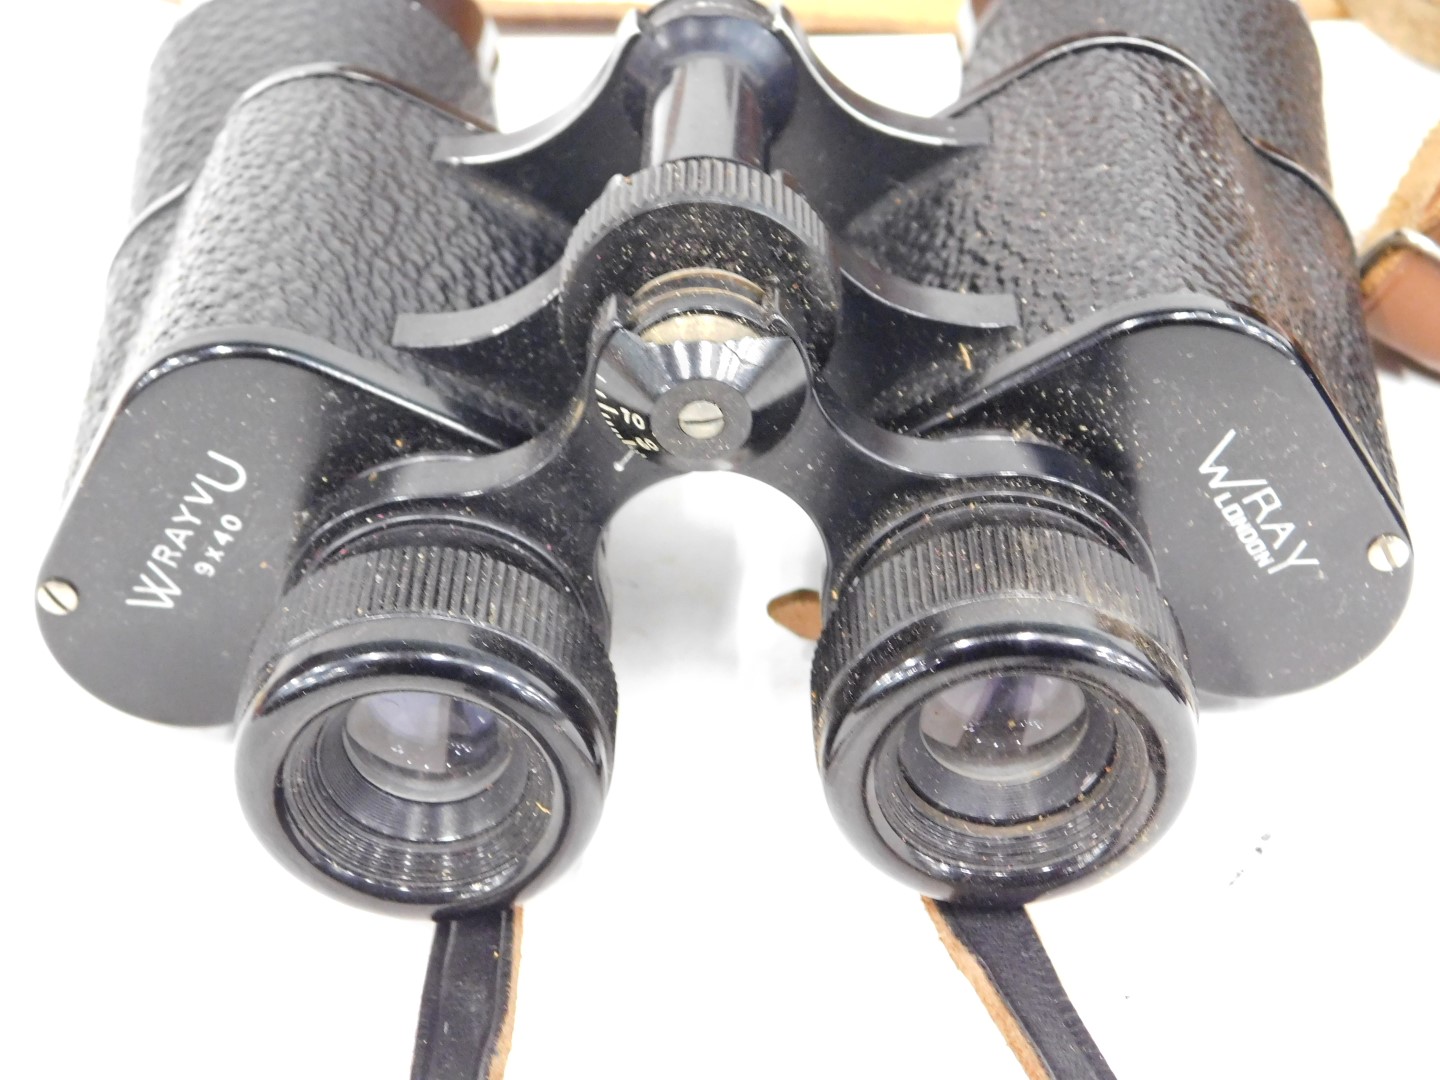 Three pairs of binoculars, comprising a set of 10x50 binoculars, Prinz 10x50 binoculars, and Ray of - Image 2 of 4